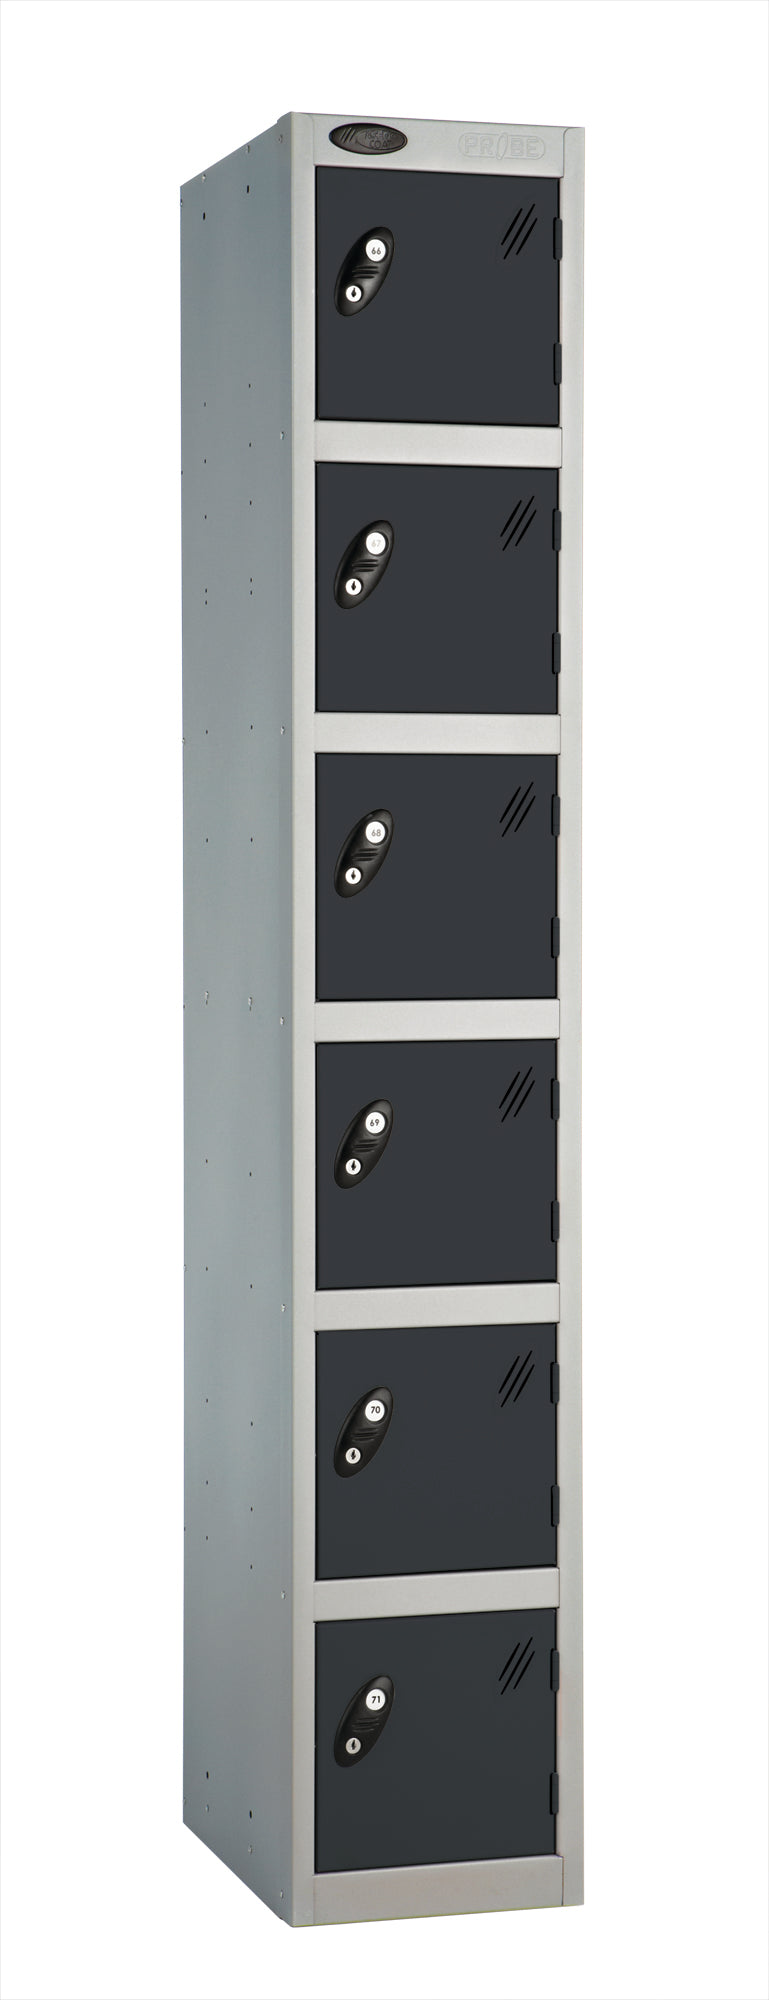 PROBEBOX STANDARD 1 NEST STEEL LOCKERS - JET BLACK 6 DOOR Storage Lockers > Lockers > Cabinets > Storage > Probe > One Stop For Safety   